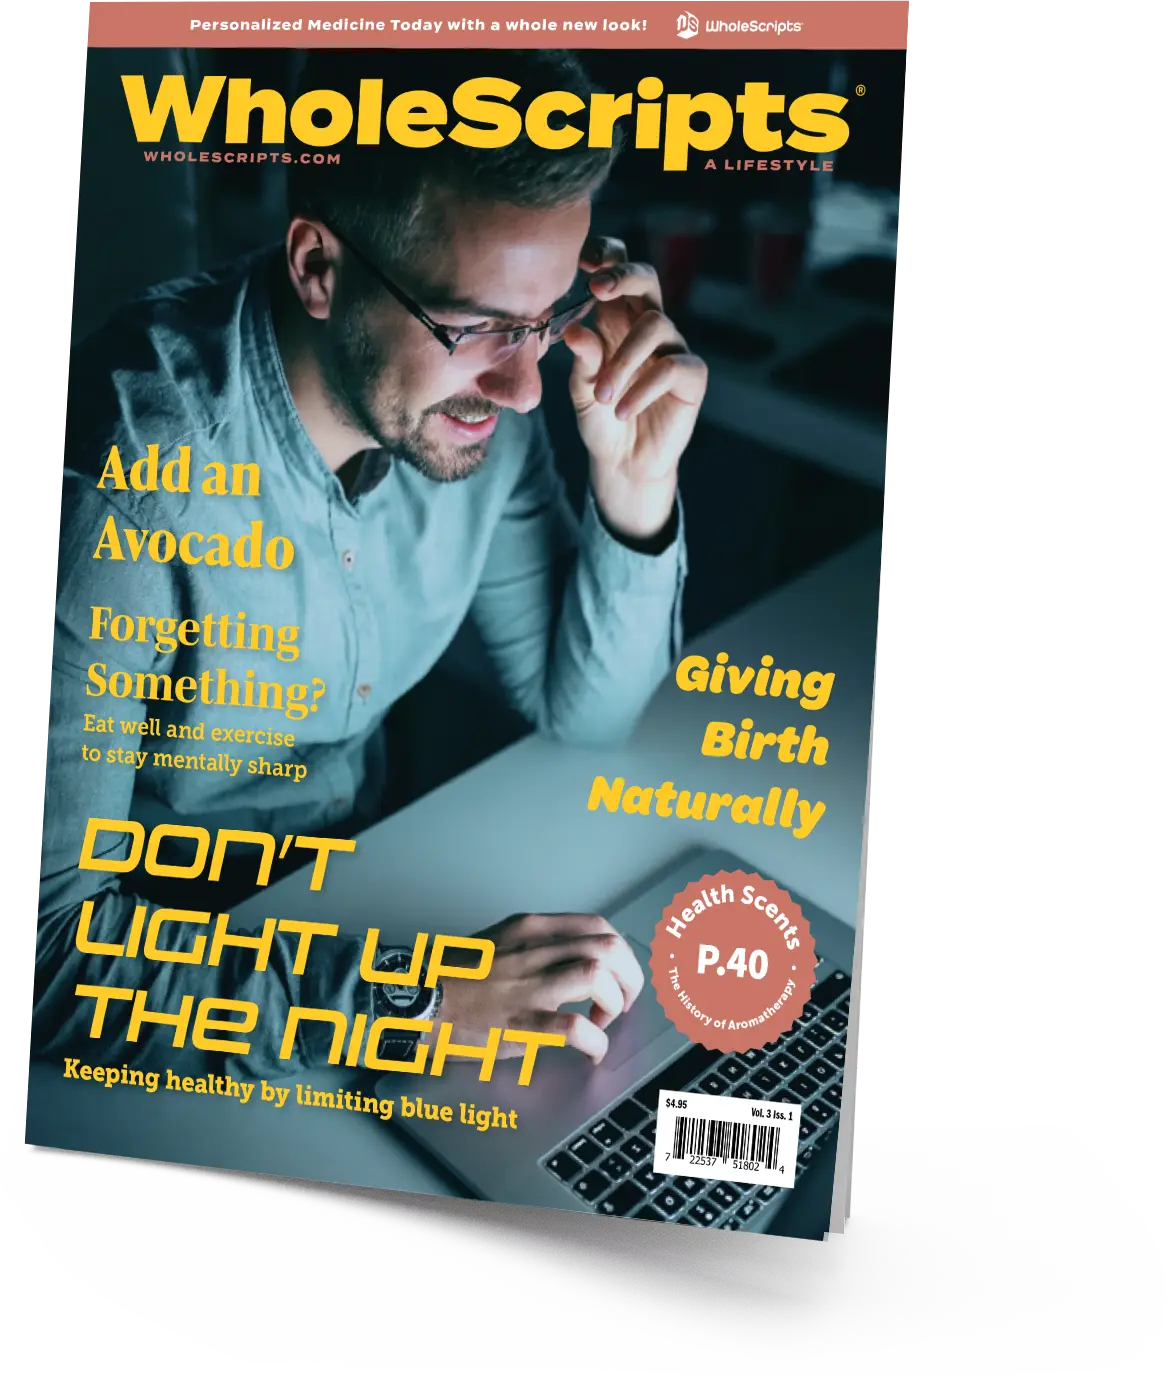 Wholescripts Magazine